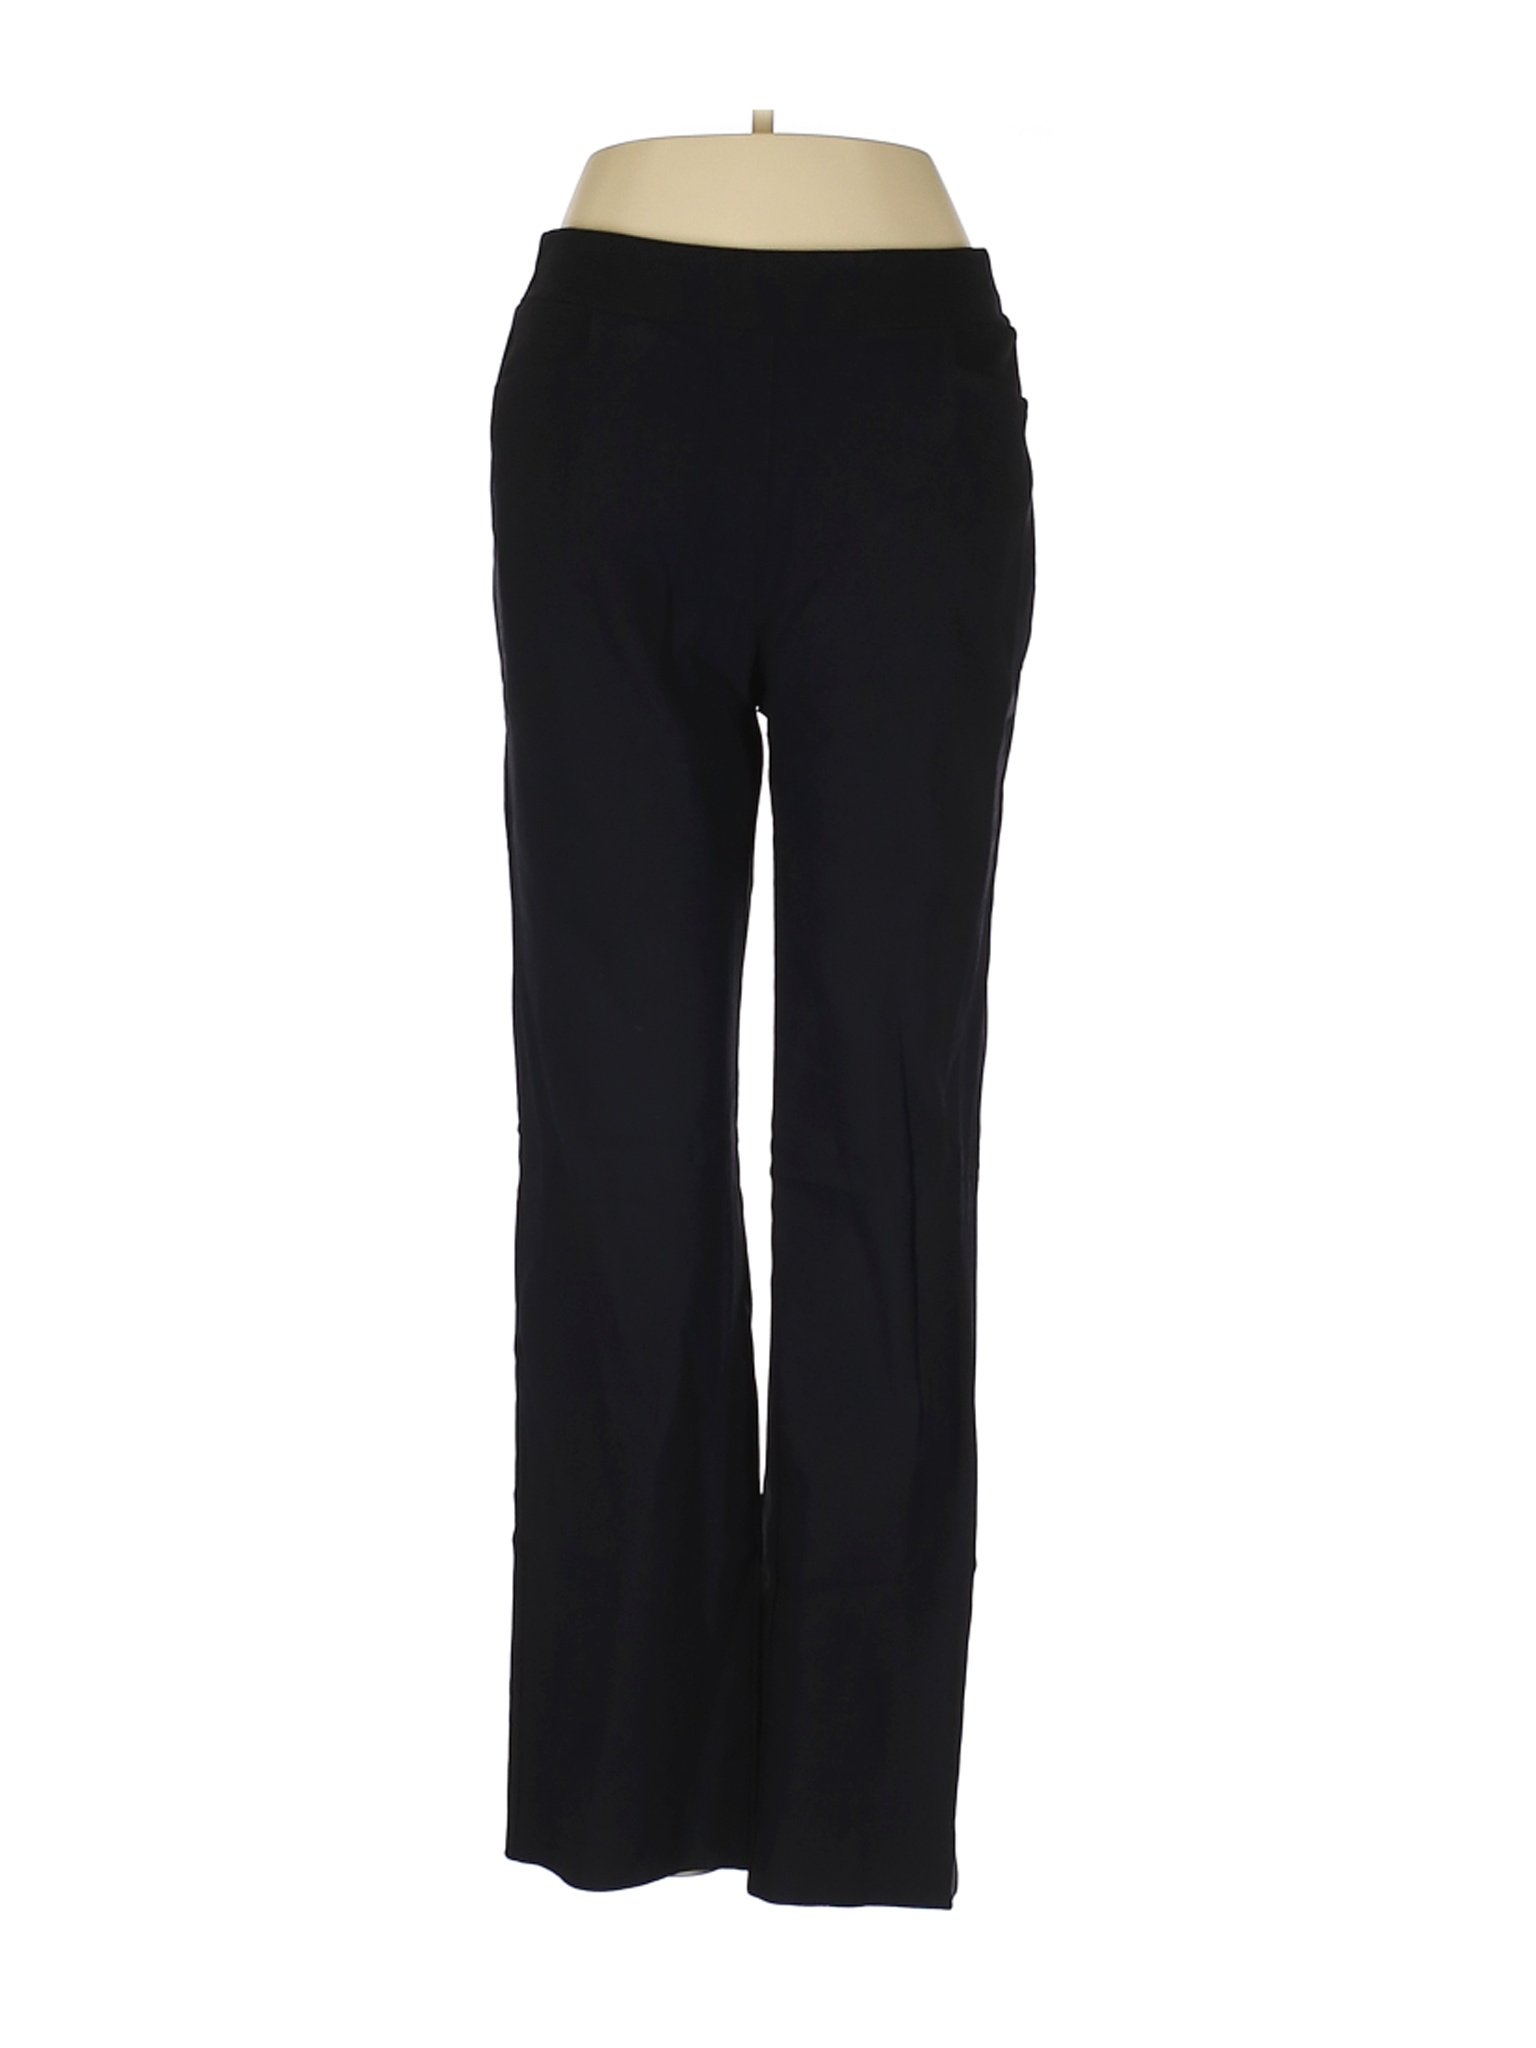 Draper's & Damon's Women Black Casual Pants S Petites | eBay